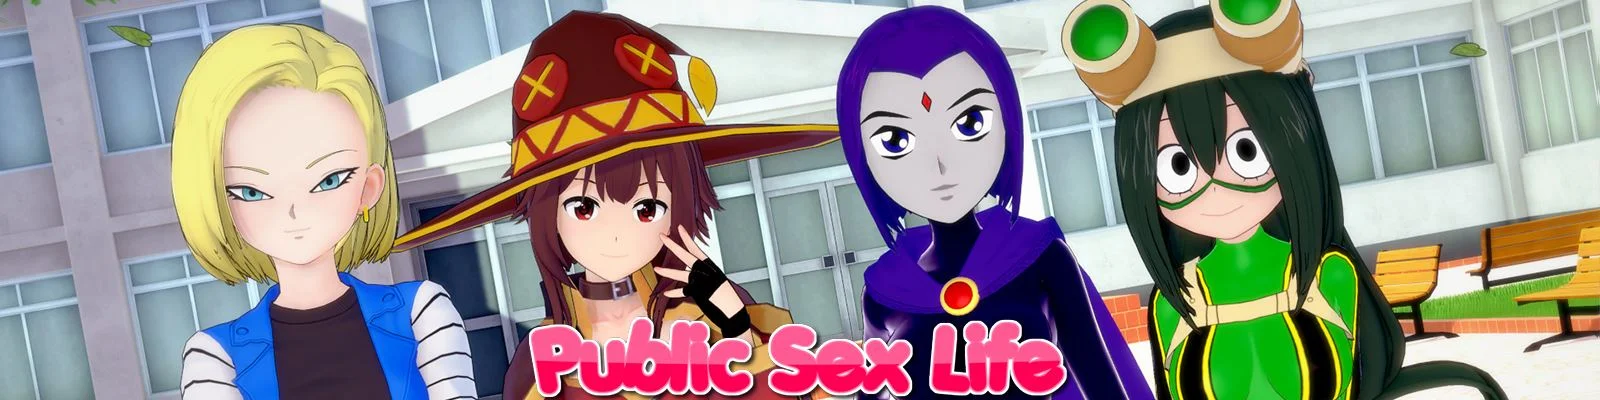 Public Sex Life [ParadiceZone] Adult xxx Game Download